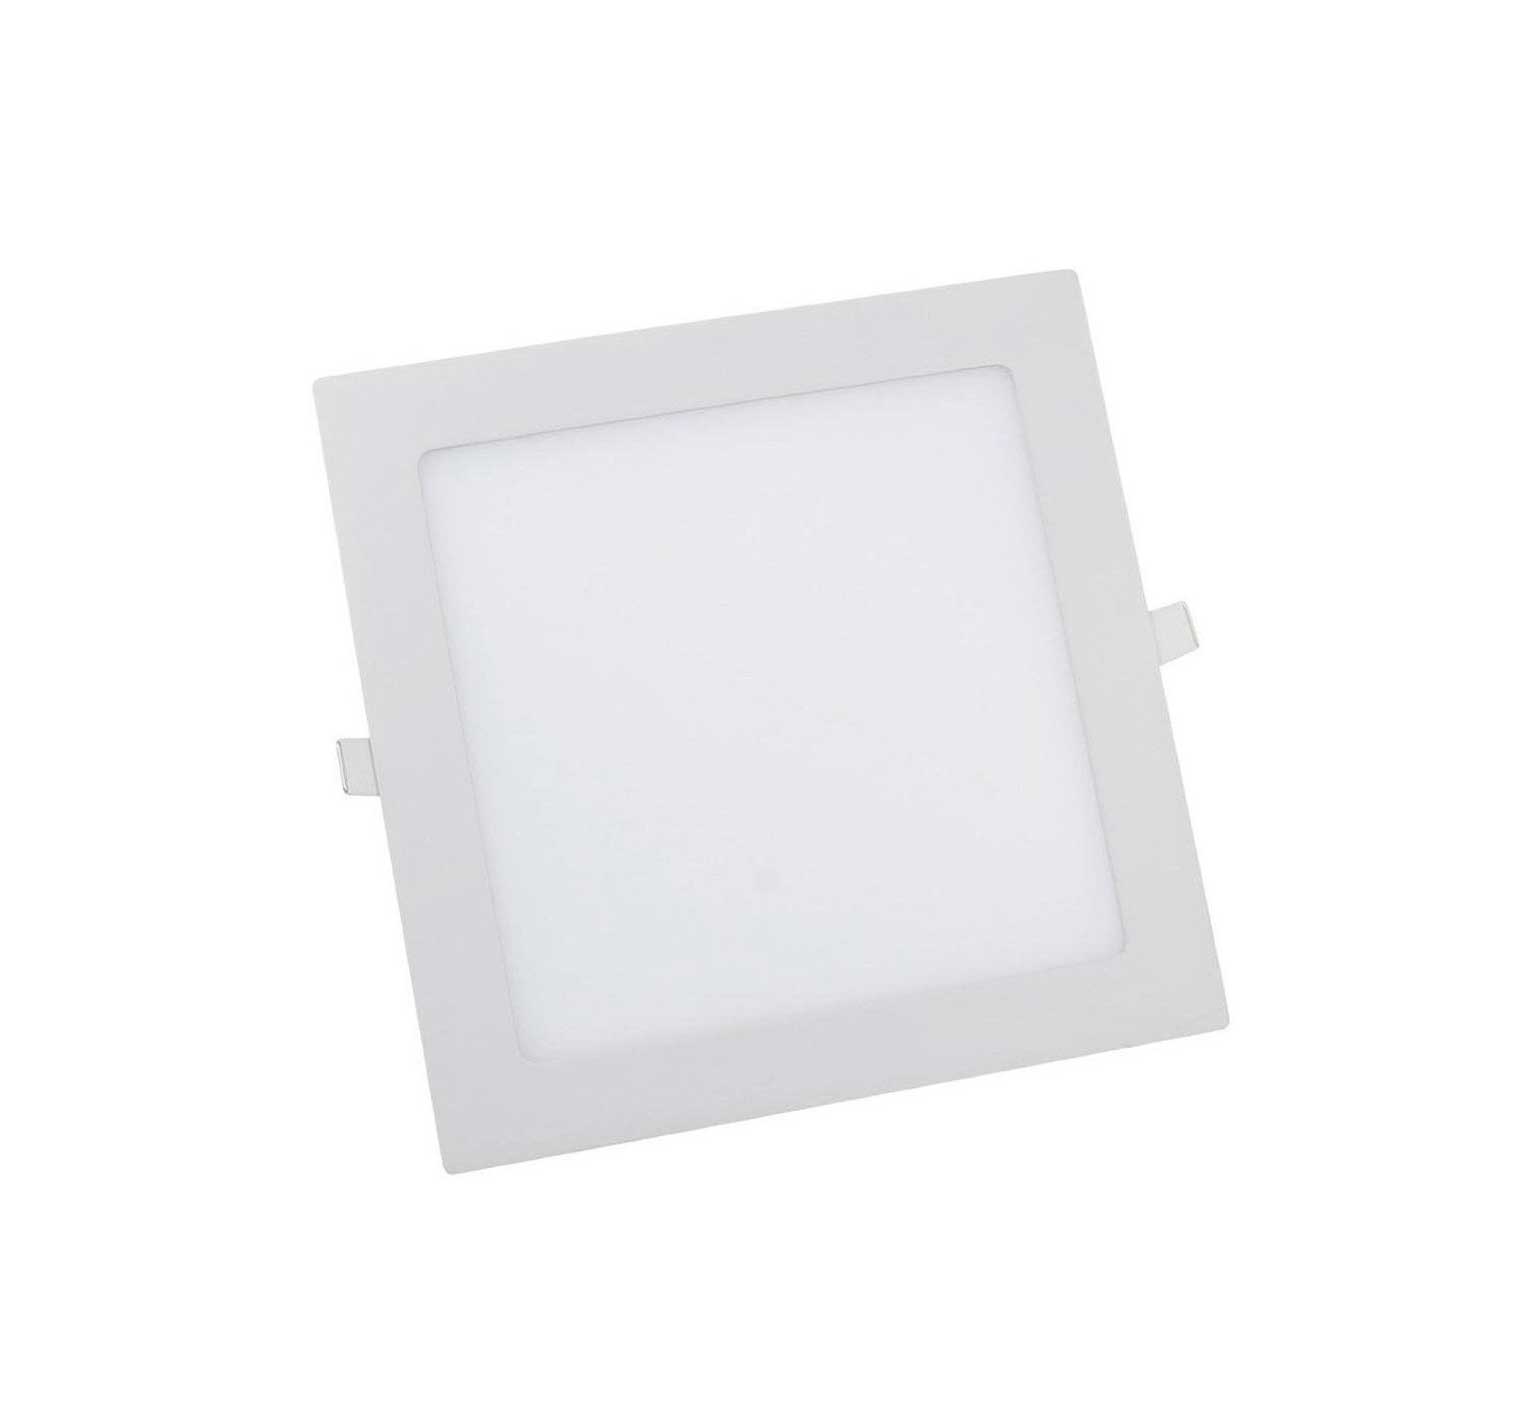 Pannello LED quadrato 6W SMD - Luce fredda 5547 Shanyao